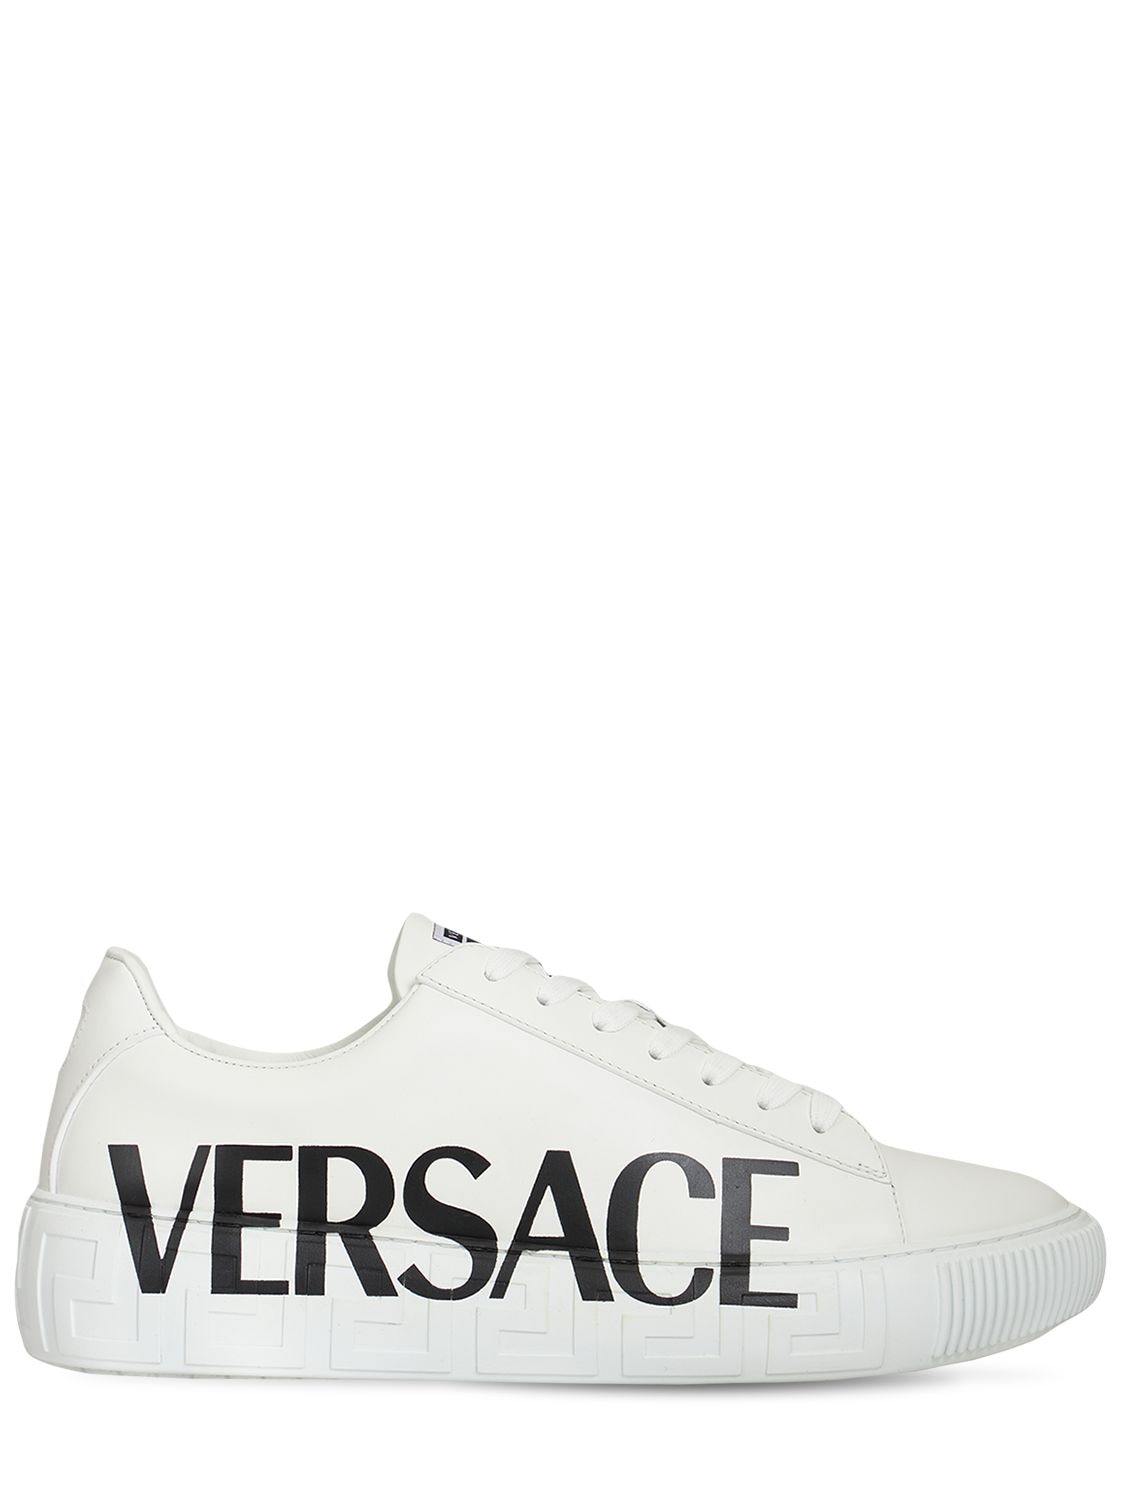 VERSACE Logo Print Leather Low Top Sneakers